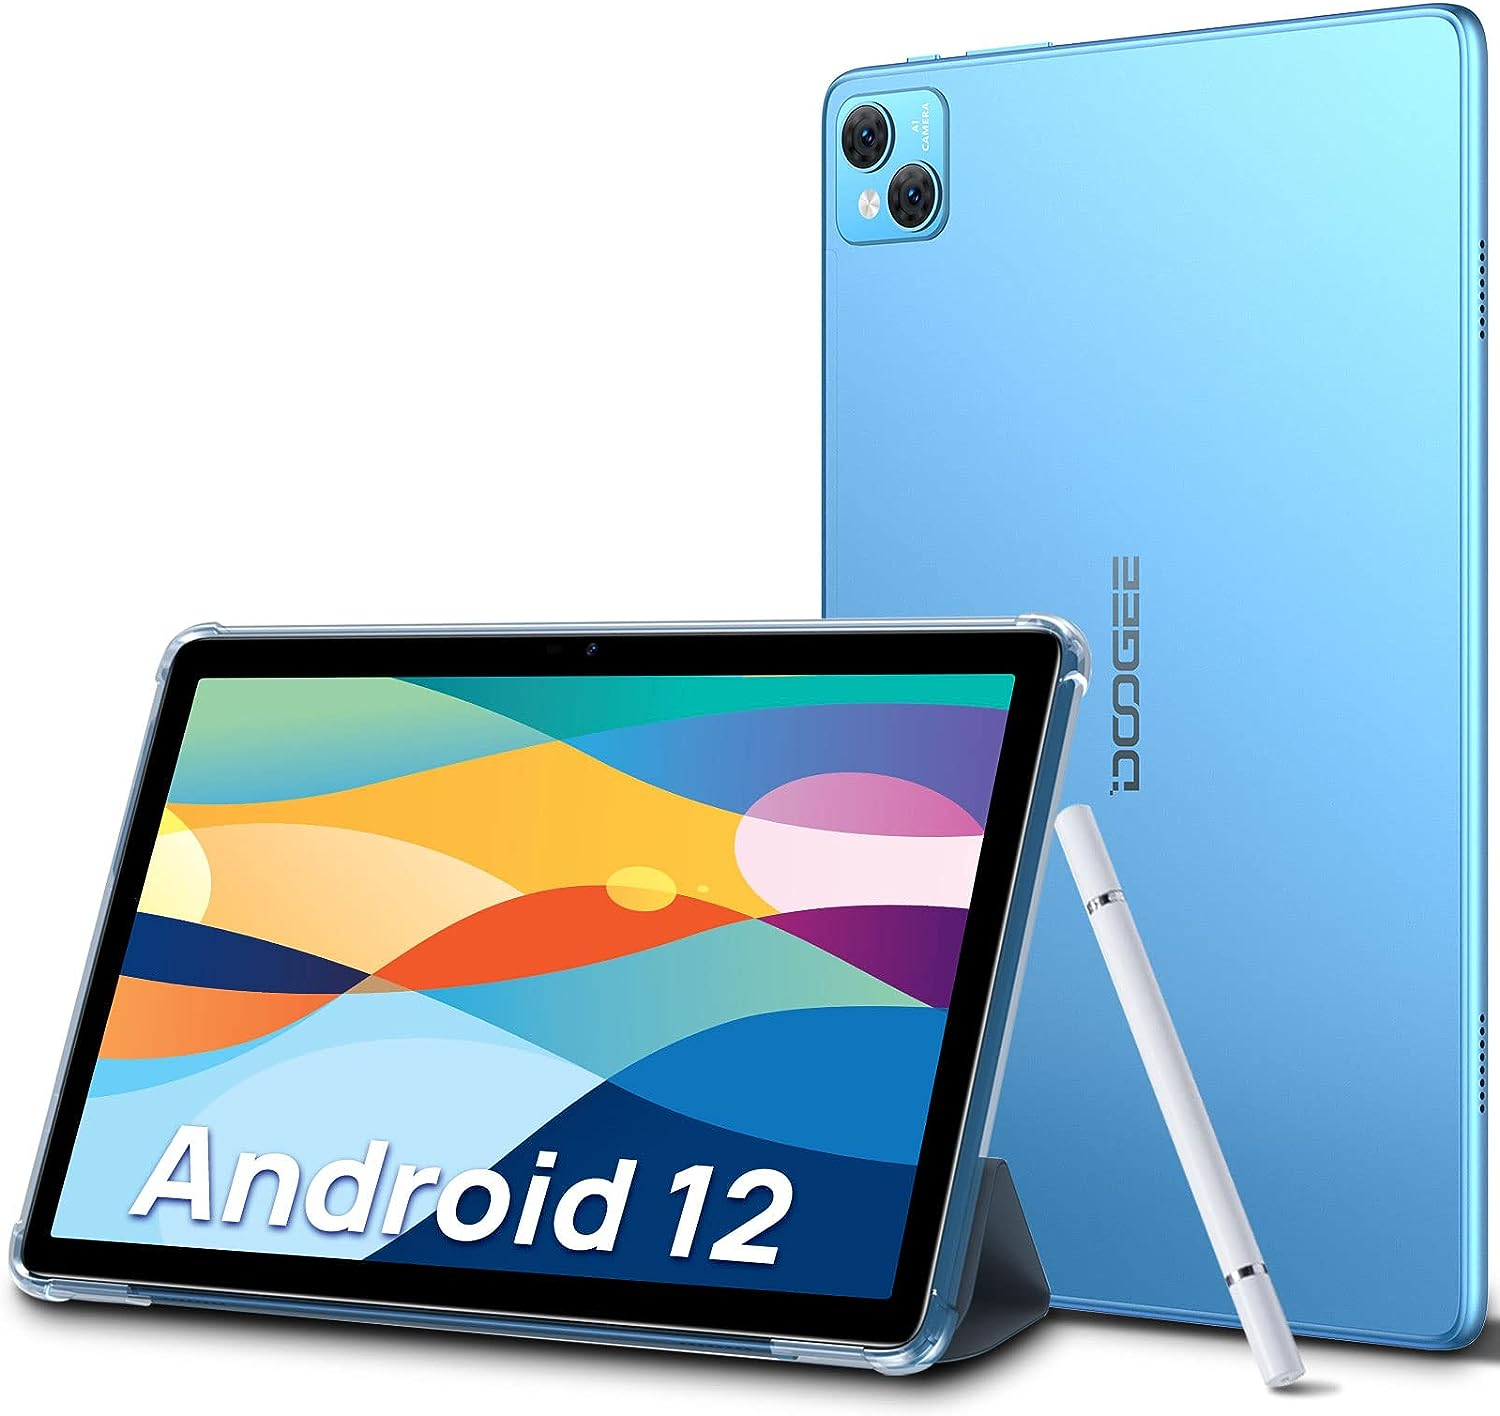 Android Tablet, Zoll, 12, GB, 10,1 T10 Blau 15GB+128GB 128 8300mAh DOOGEE 4G